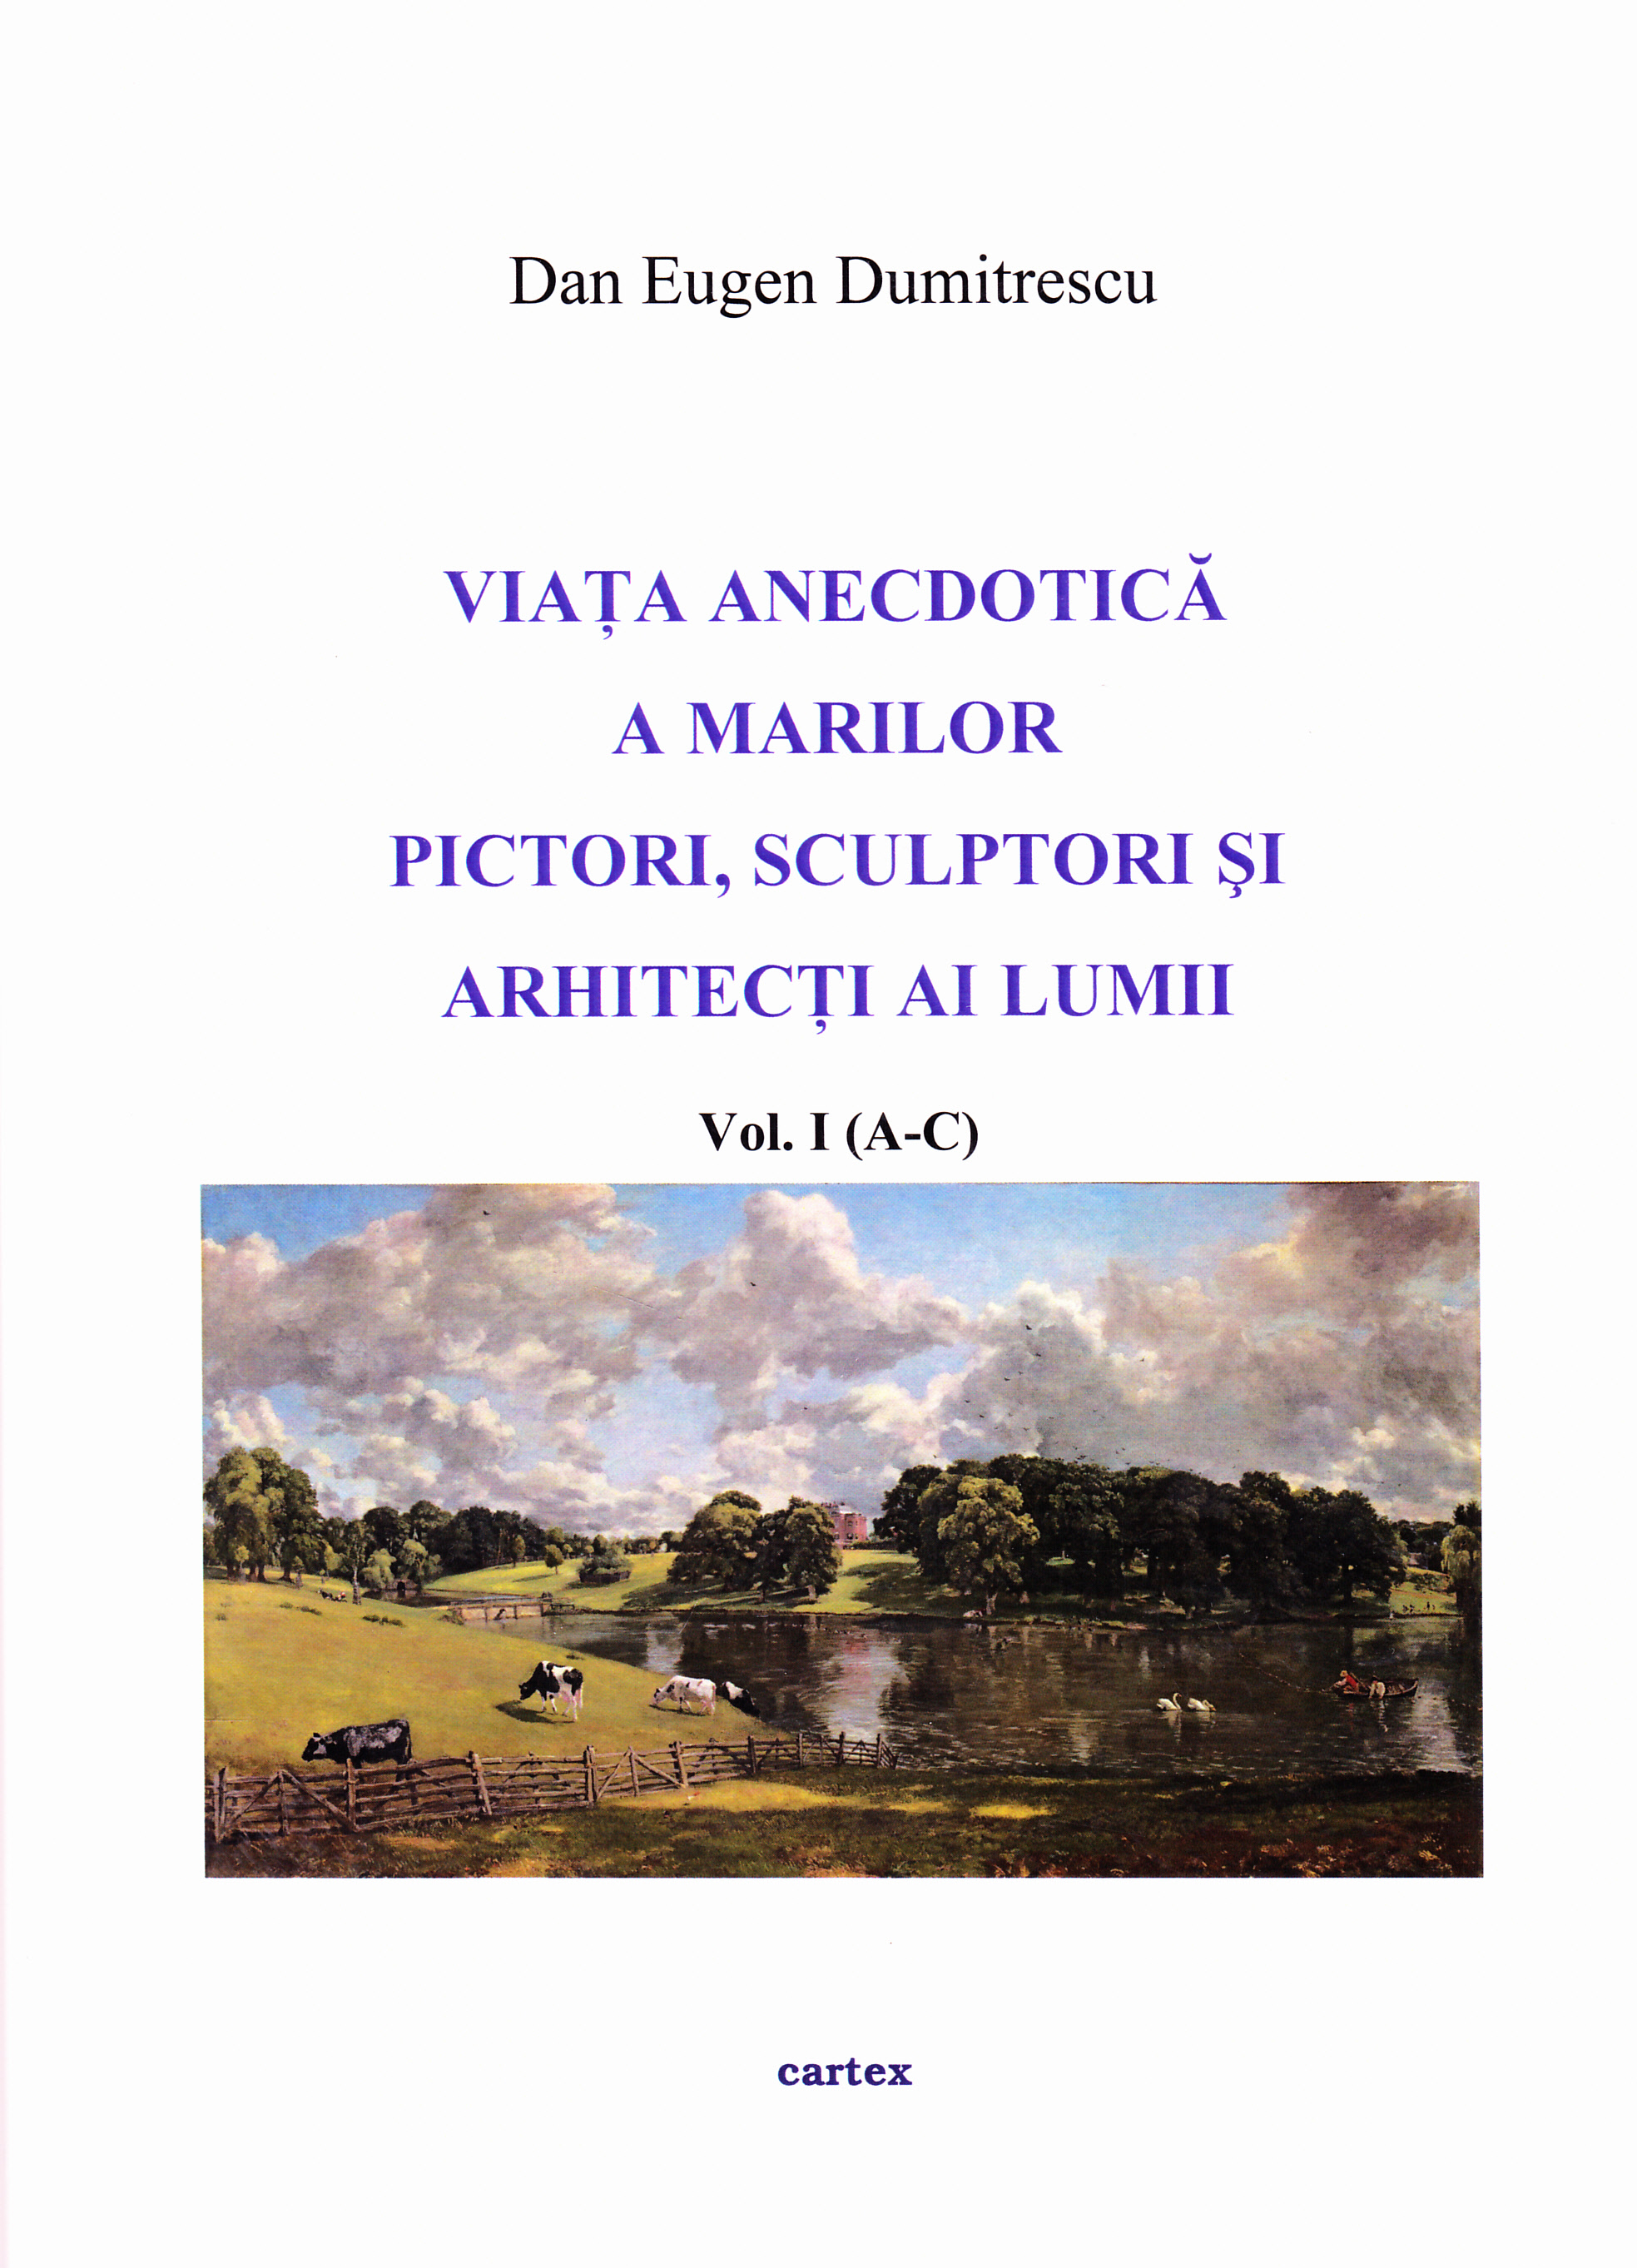 Viata anecdotica a marilor pictori, sculptori si arhitecti ai lumii, vol.1 (A-C)  - Dan Eugen Dumitrescu